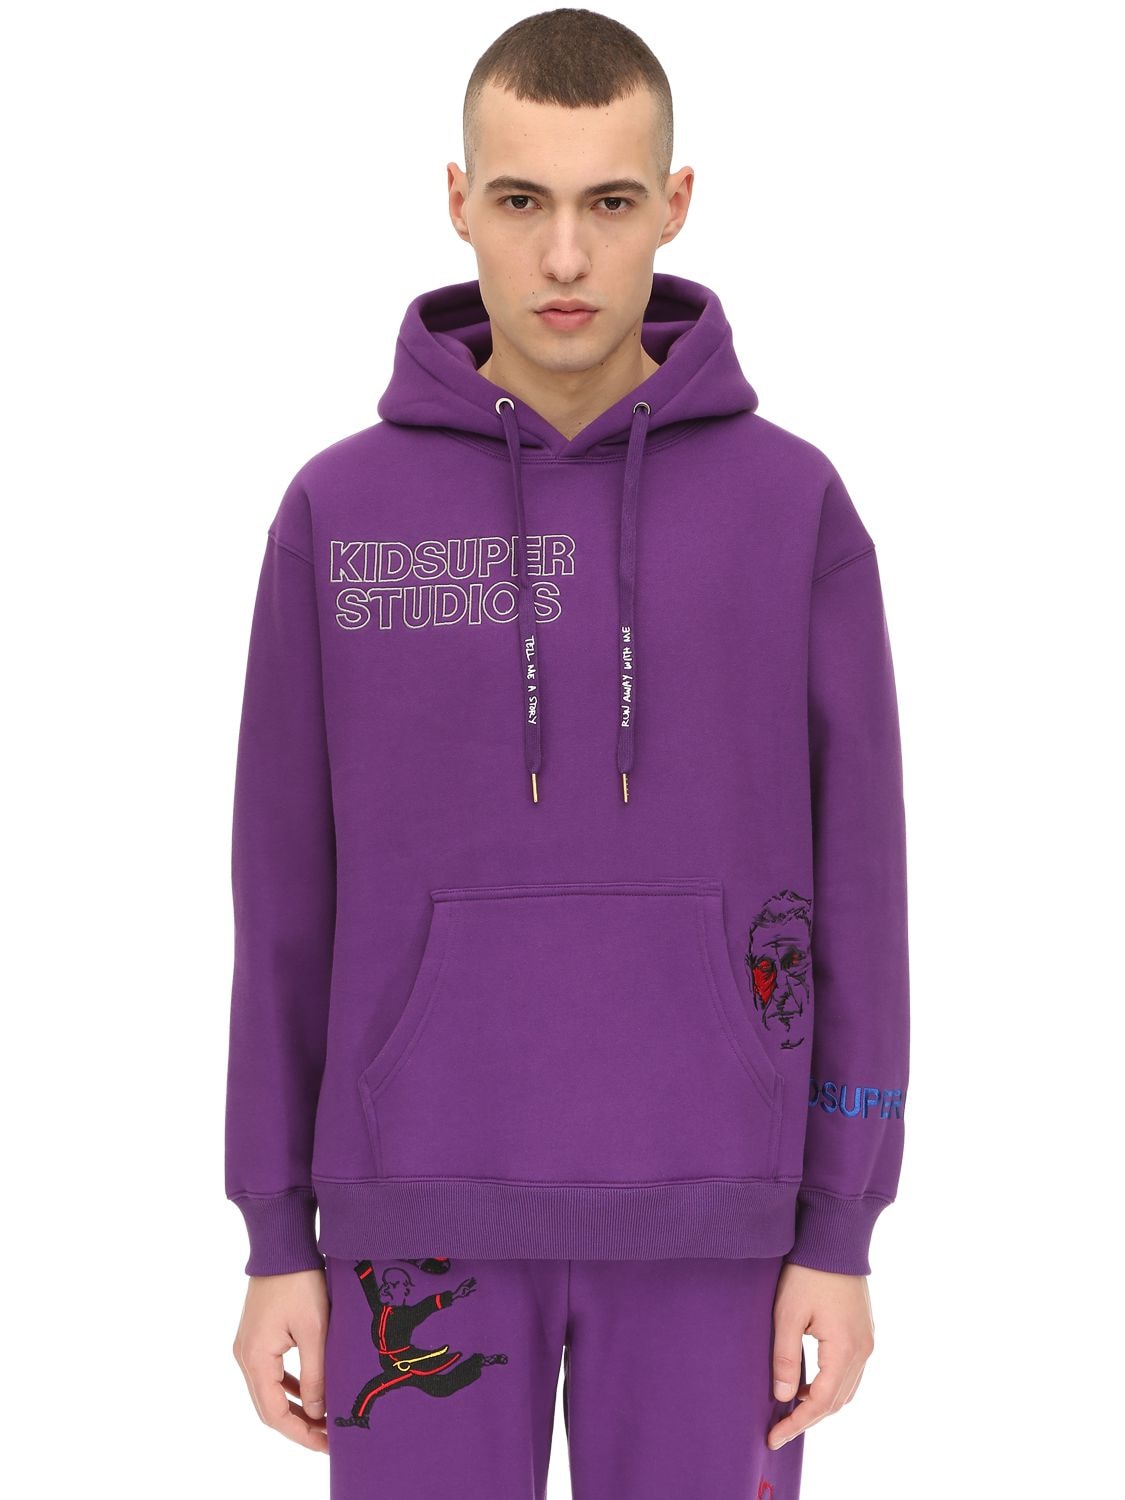 Kidsuper Super Cotton Sweatshirt Hoodie In Purple